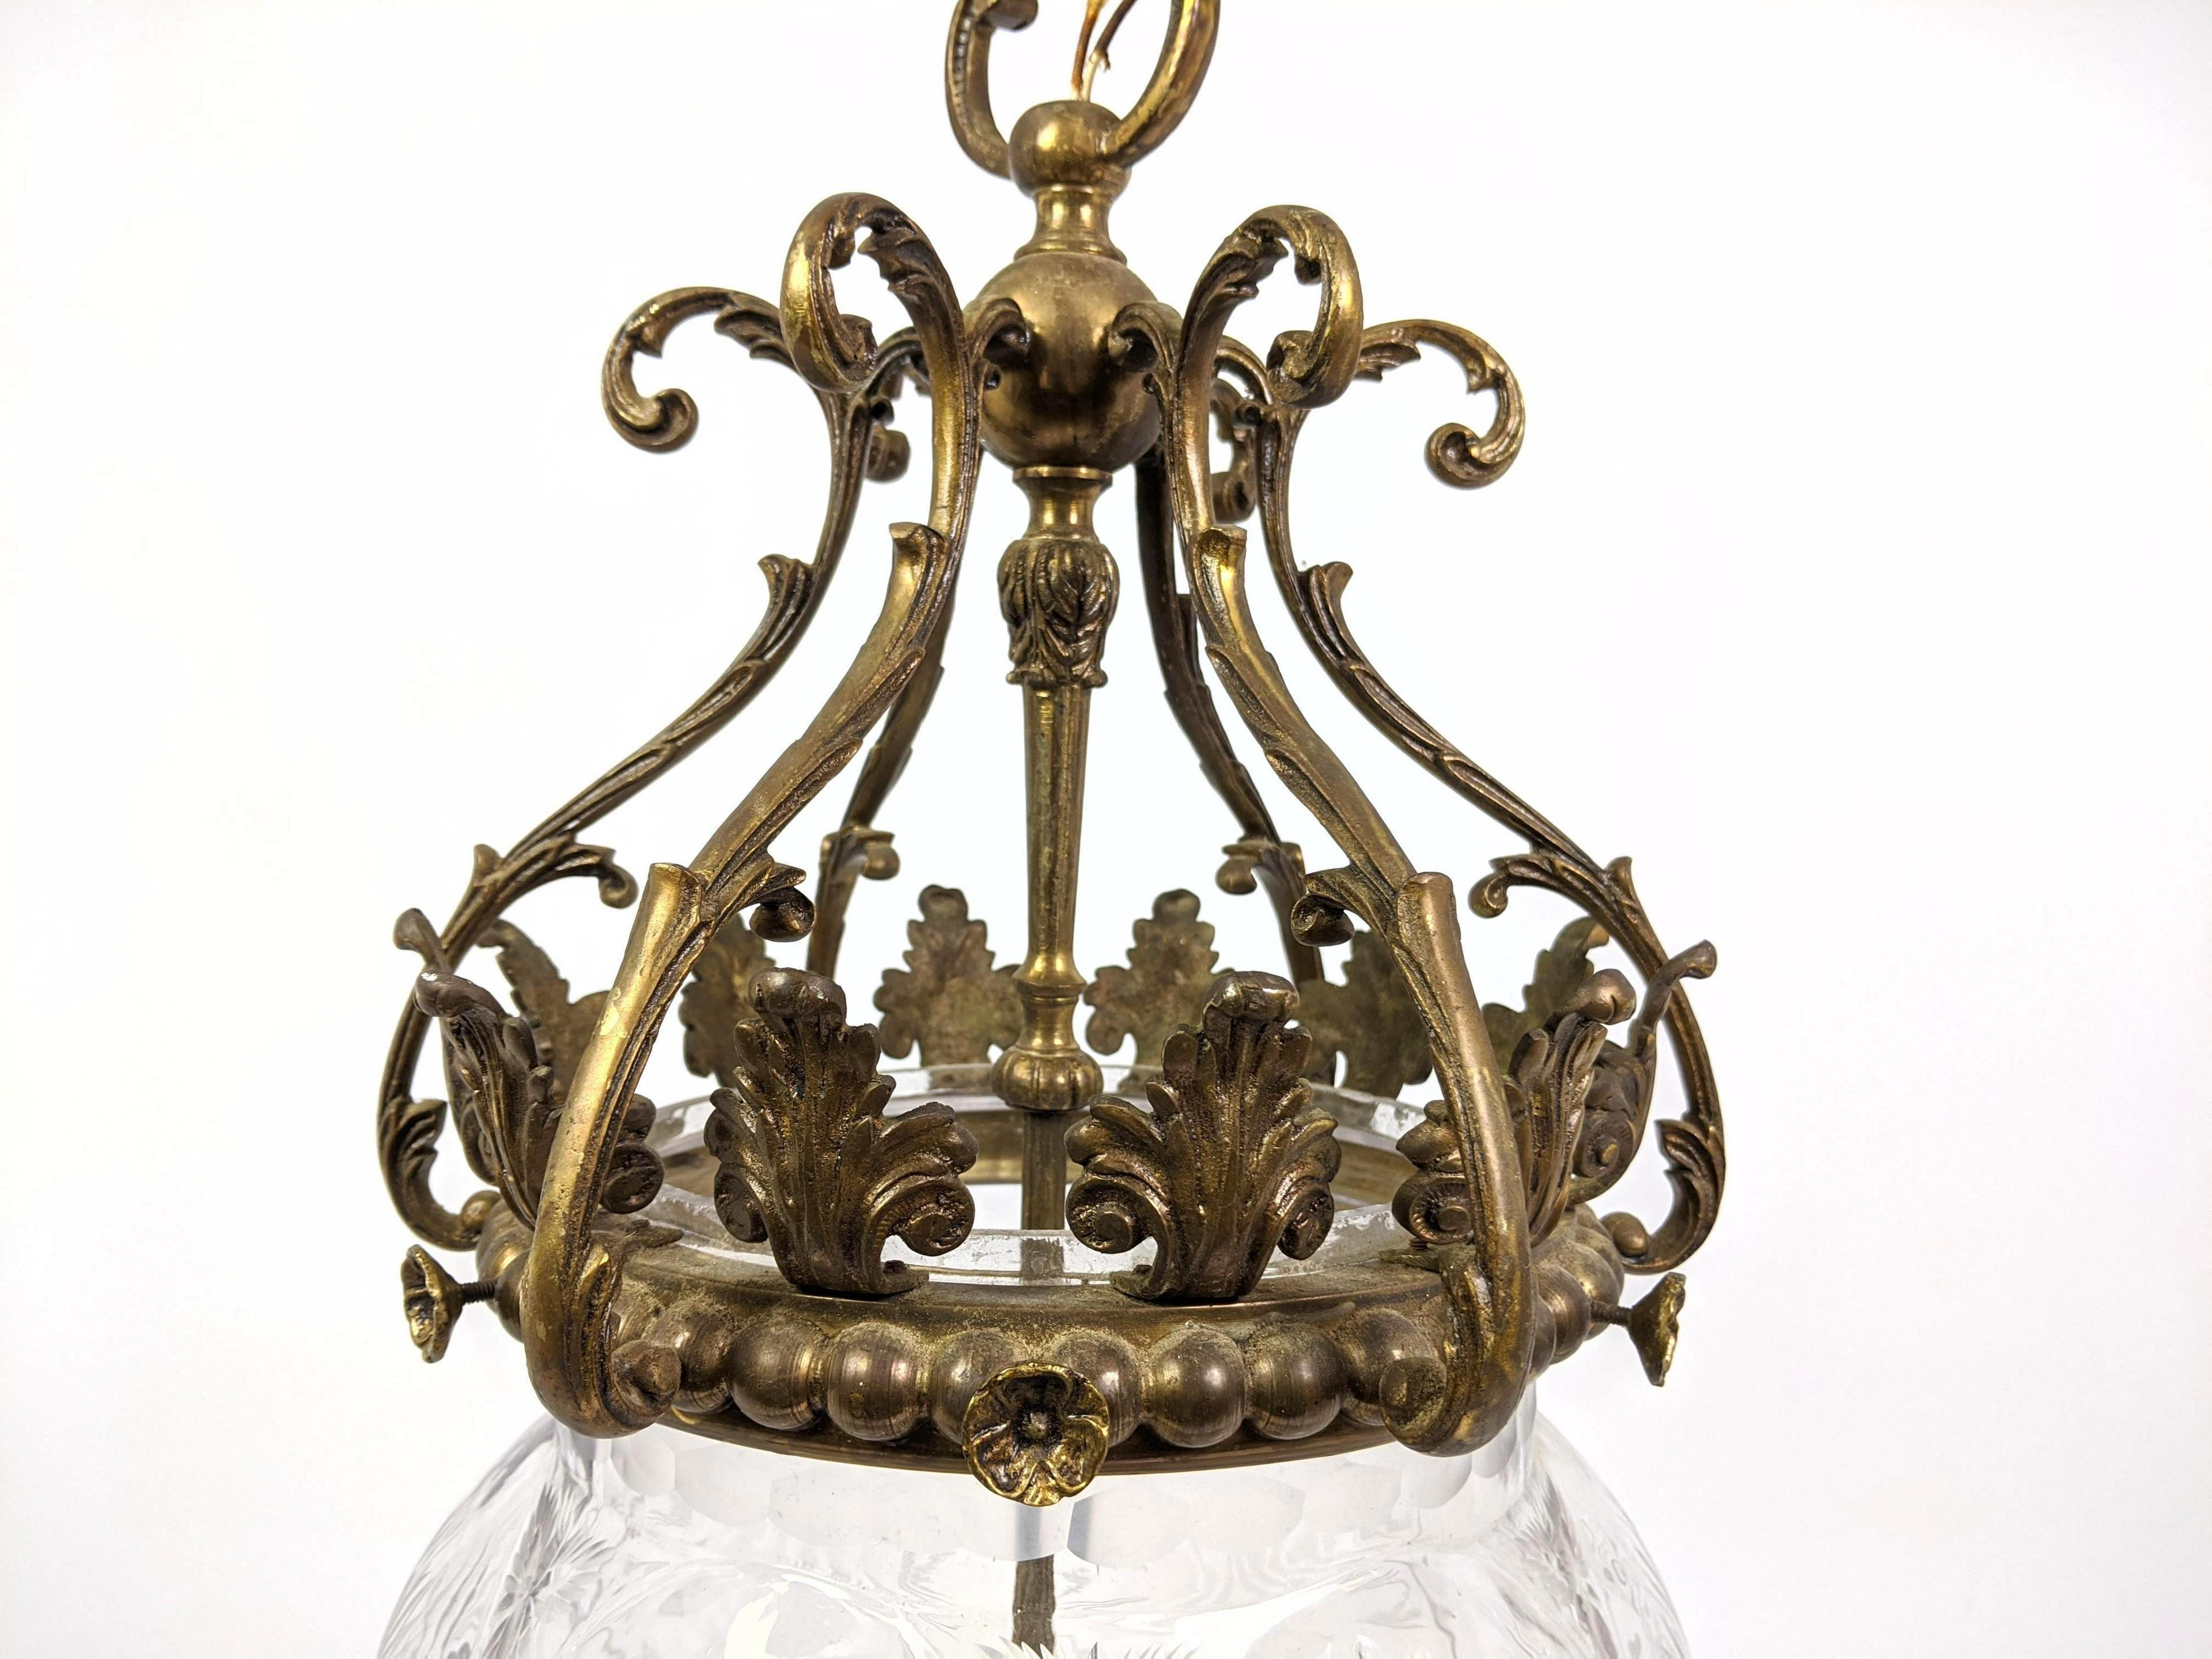 Wonderful bronze & cut crystal lantern hanging pendant light fixture engraved starburst pattern globe chandelier, rewired with 3 new candelabra sockets.

Dimensions: 27.5